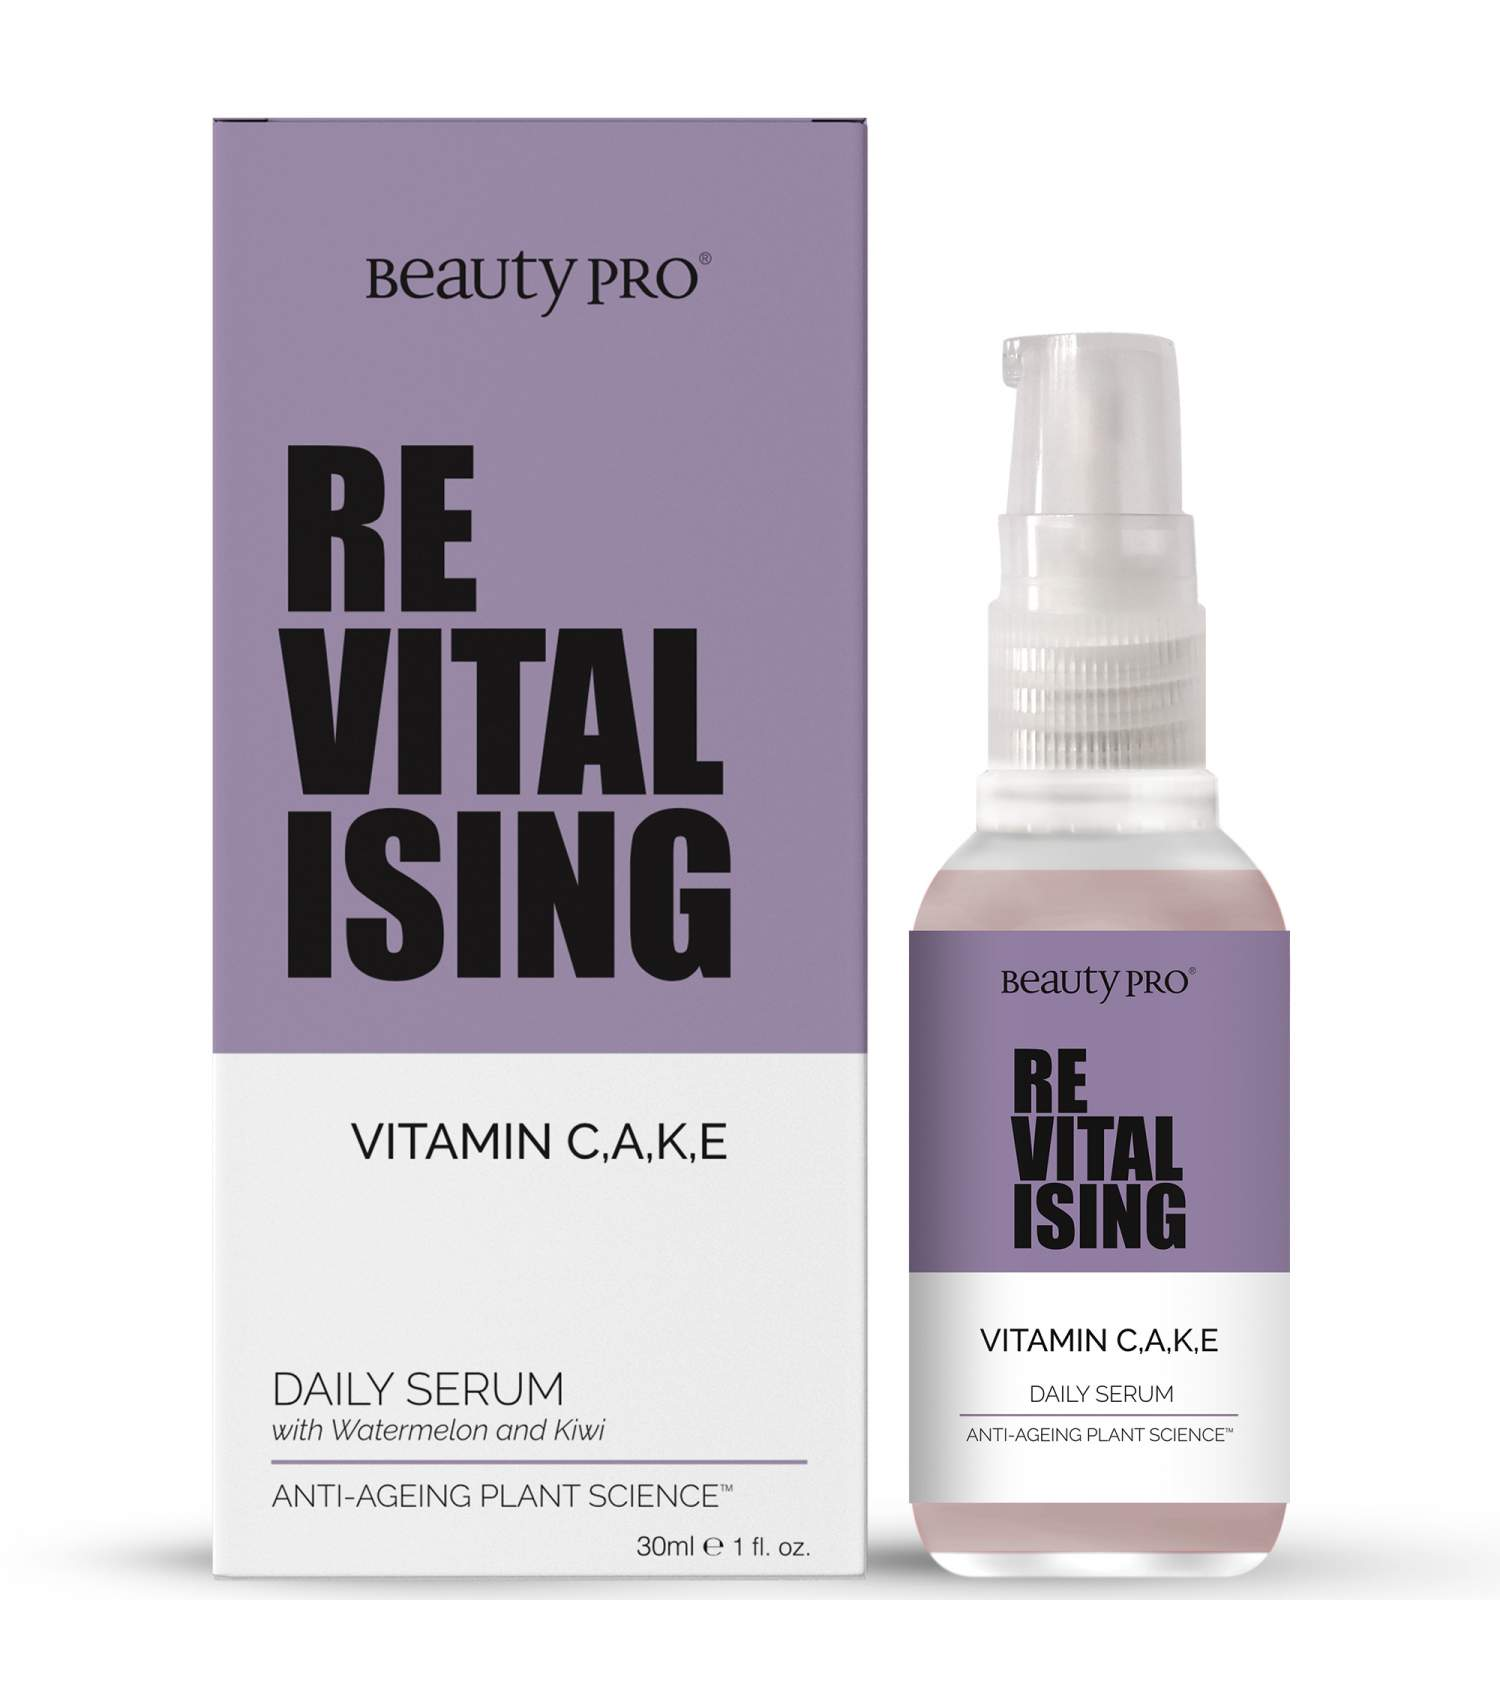 BeautyPro REVITALISING Vitamin CAKE Daily Serum BeautyPro REVITALISING Vitamin CAKE Daily Serum 1